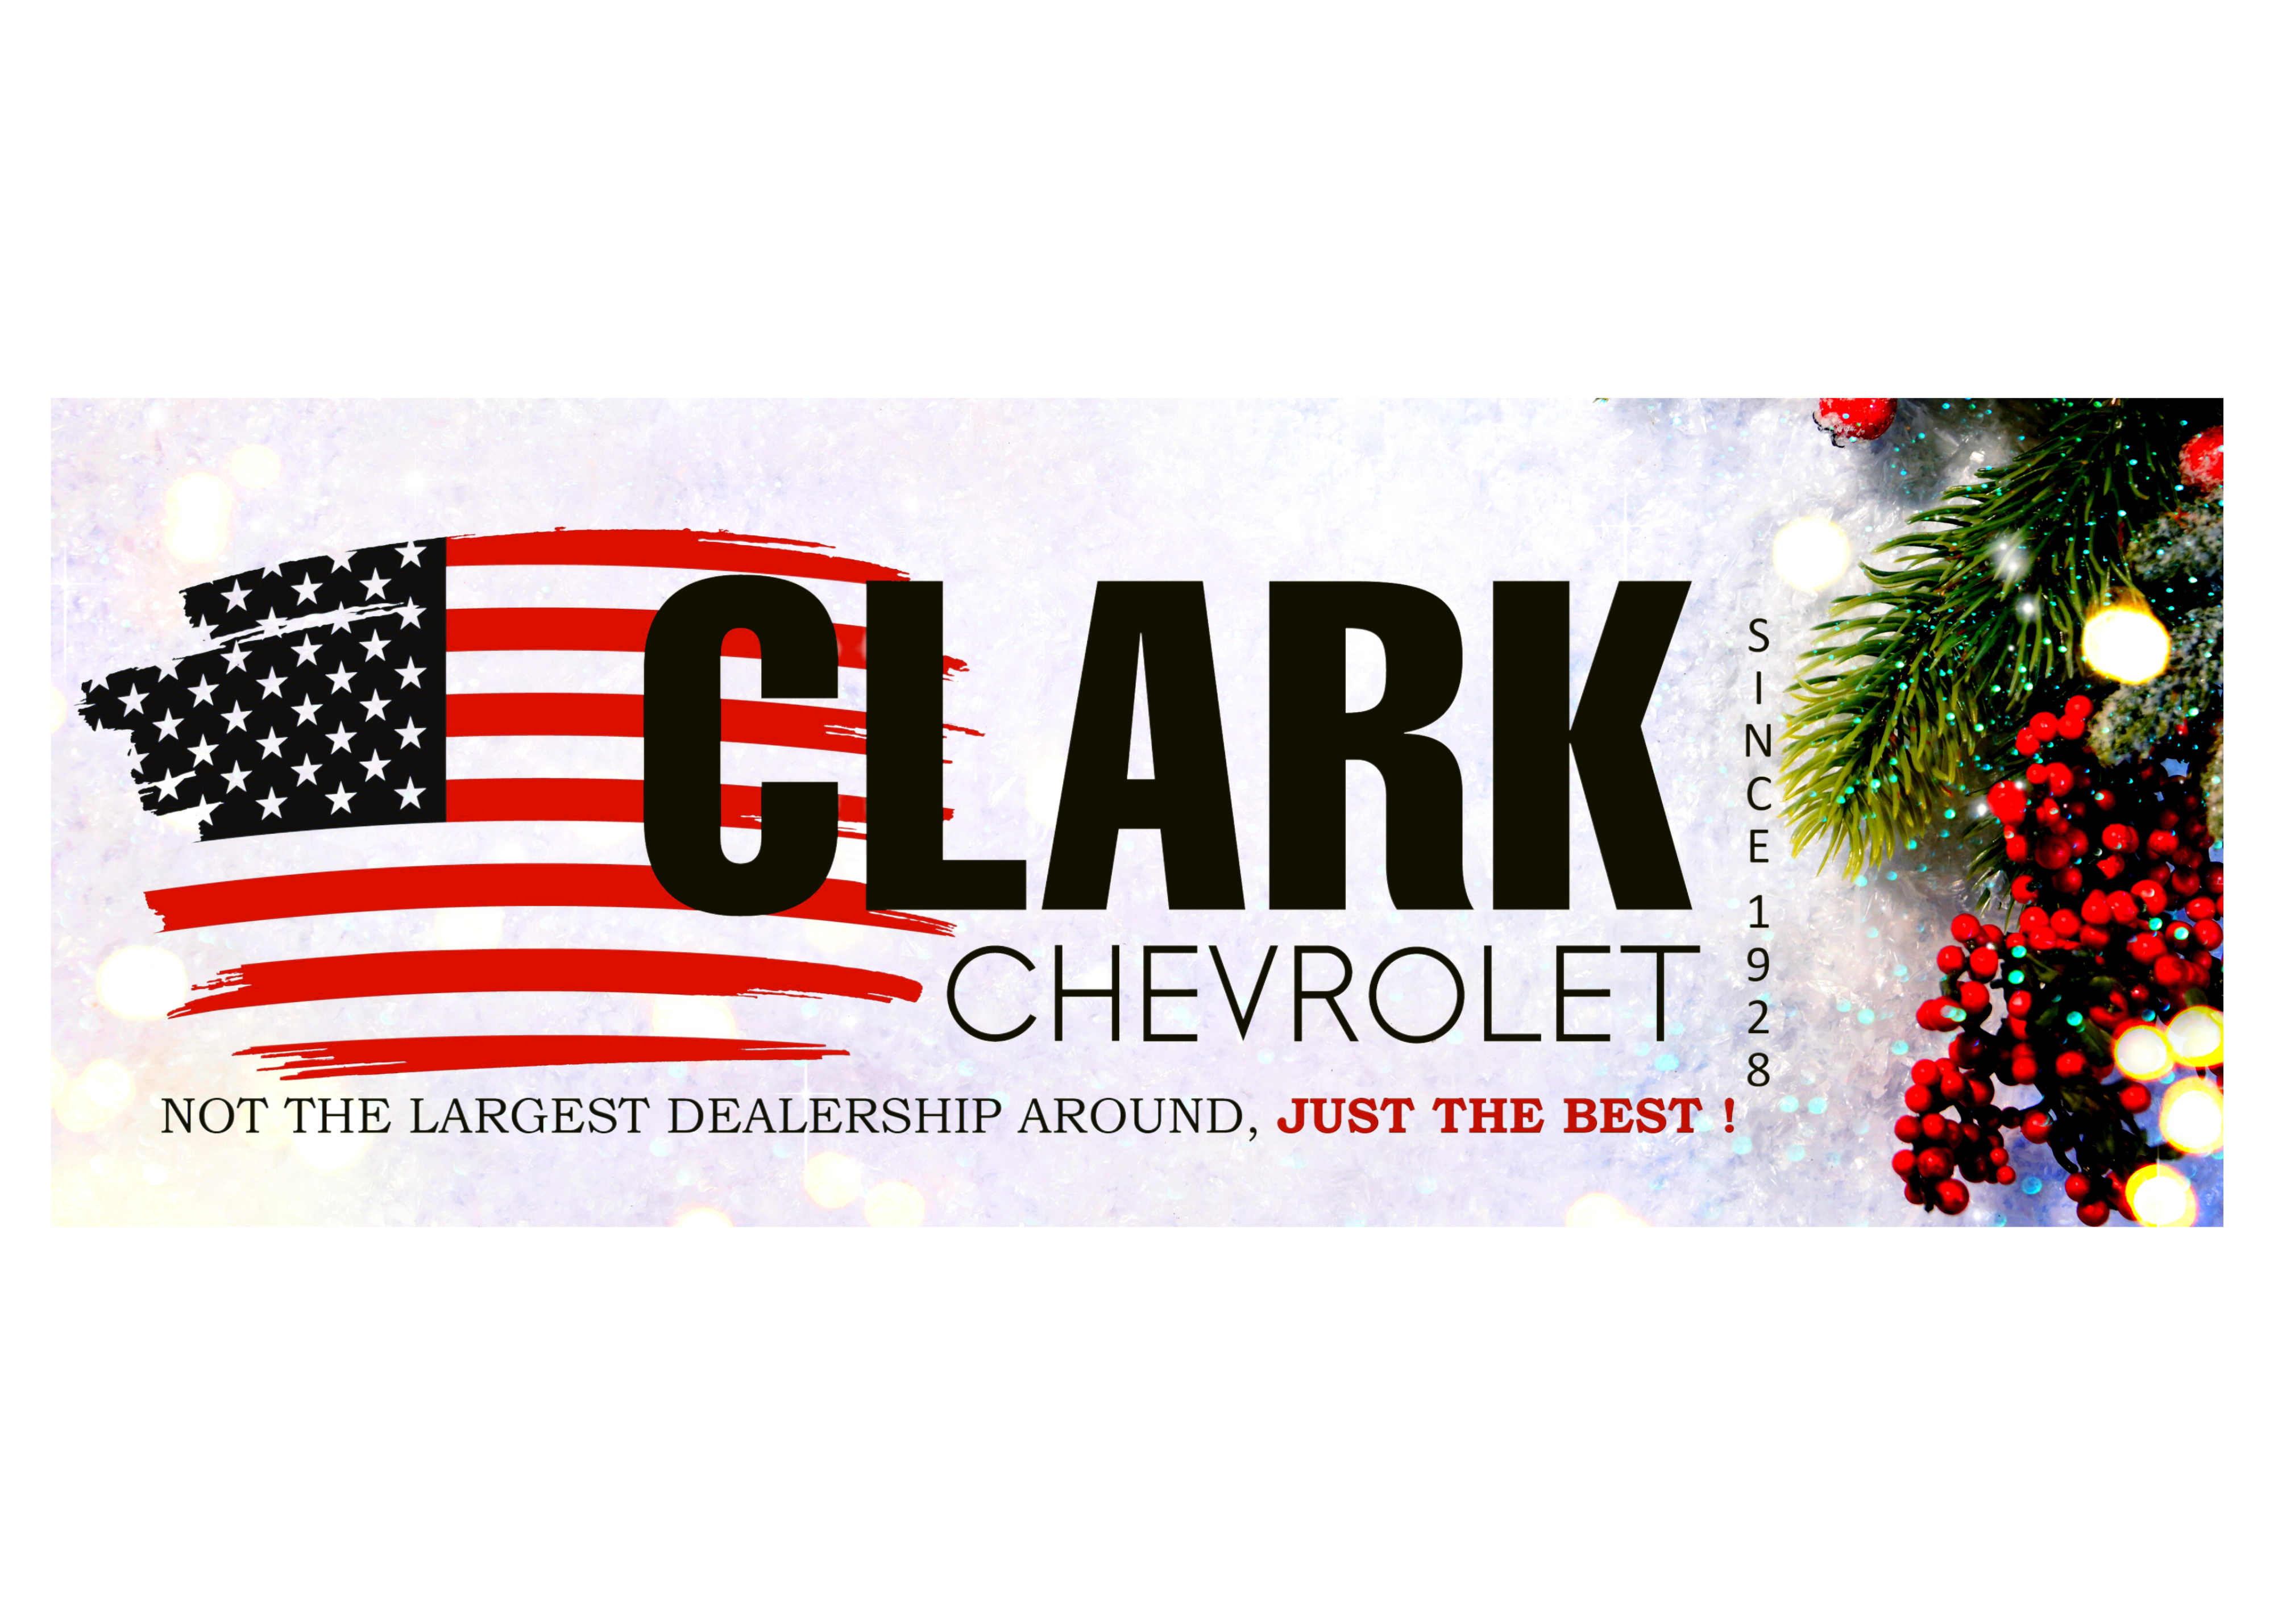 Clark Chevrolet